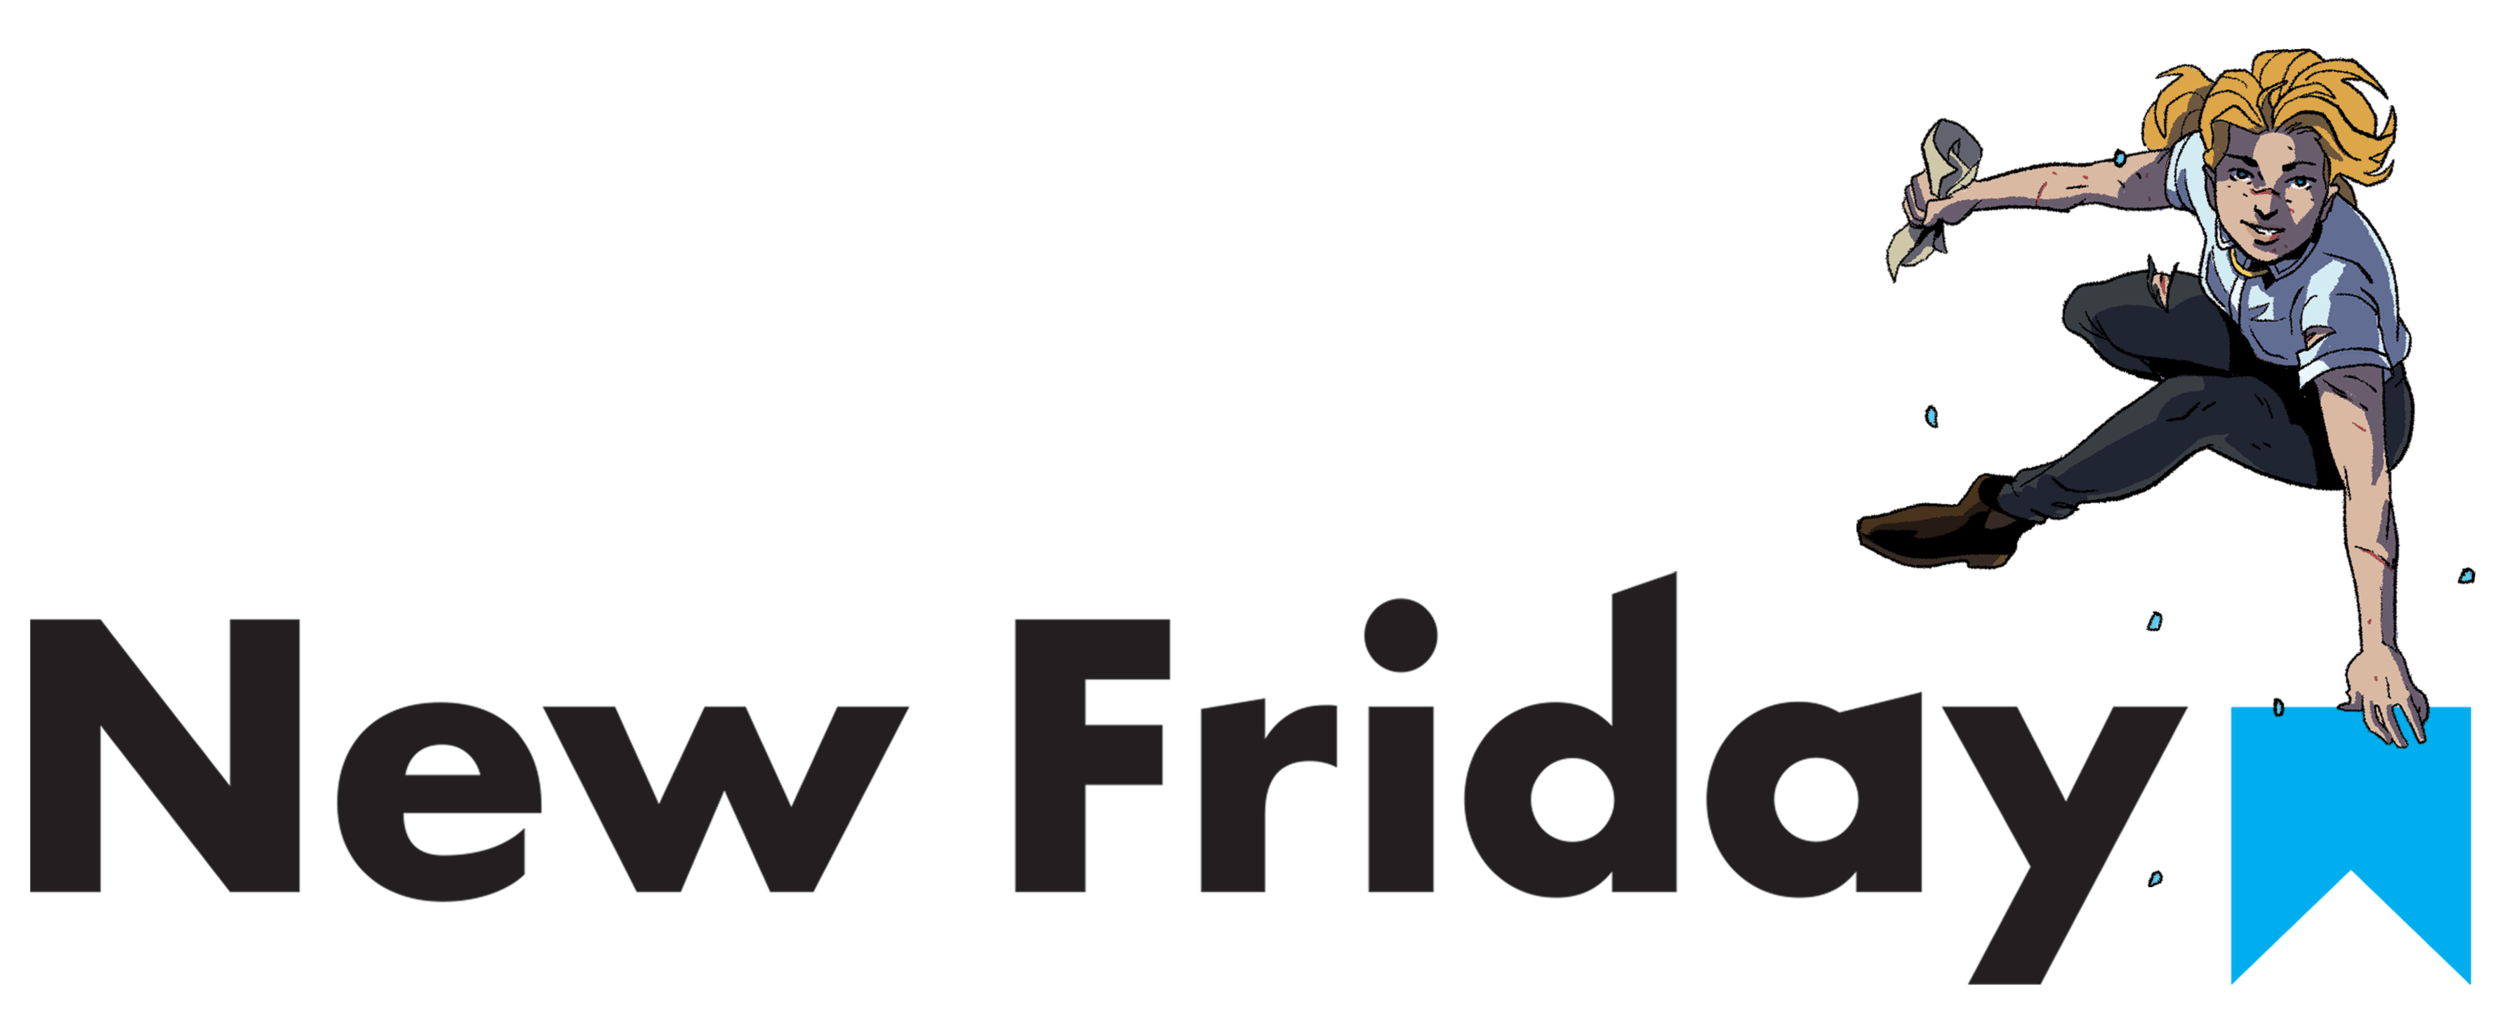 New_Friday_logo_minerva.png